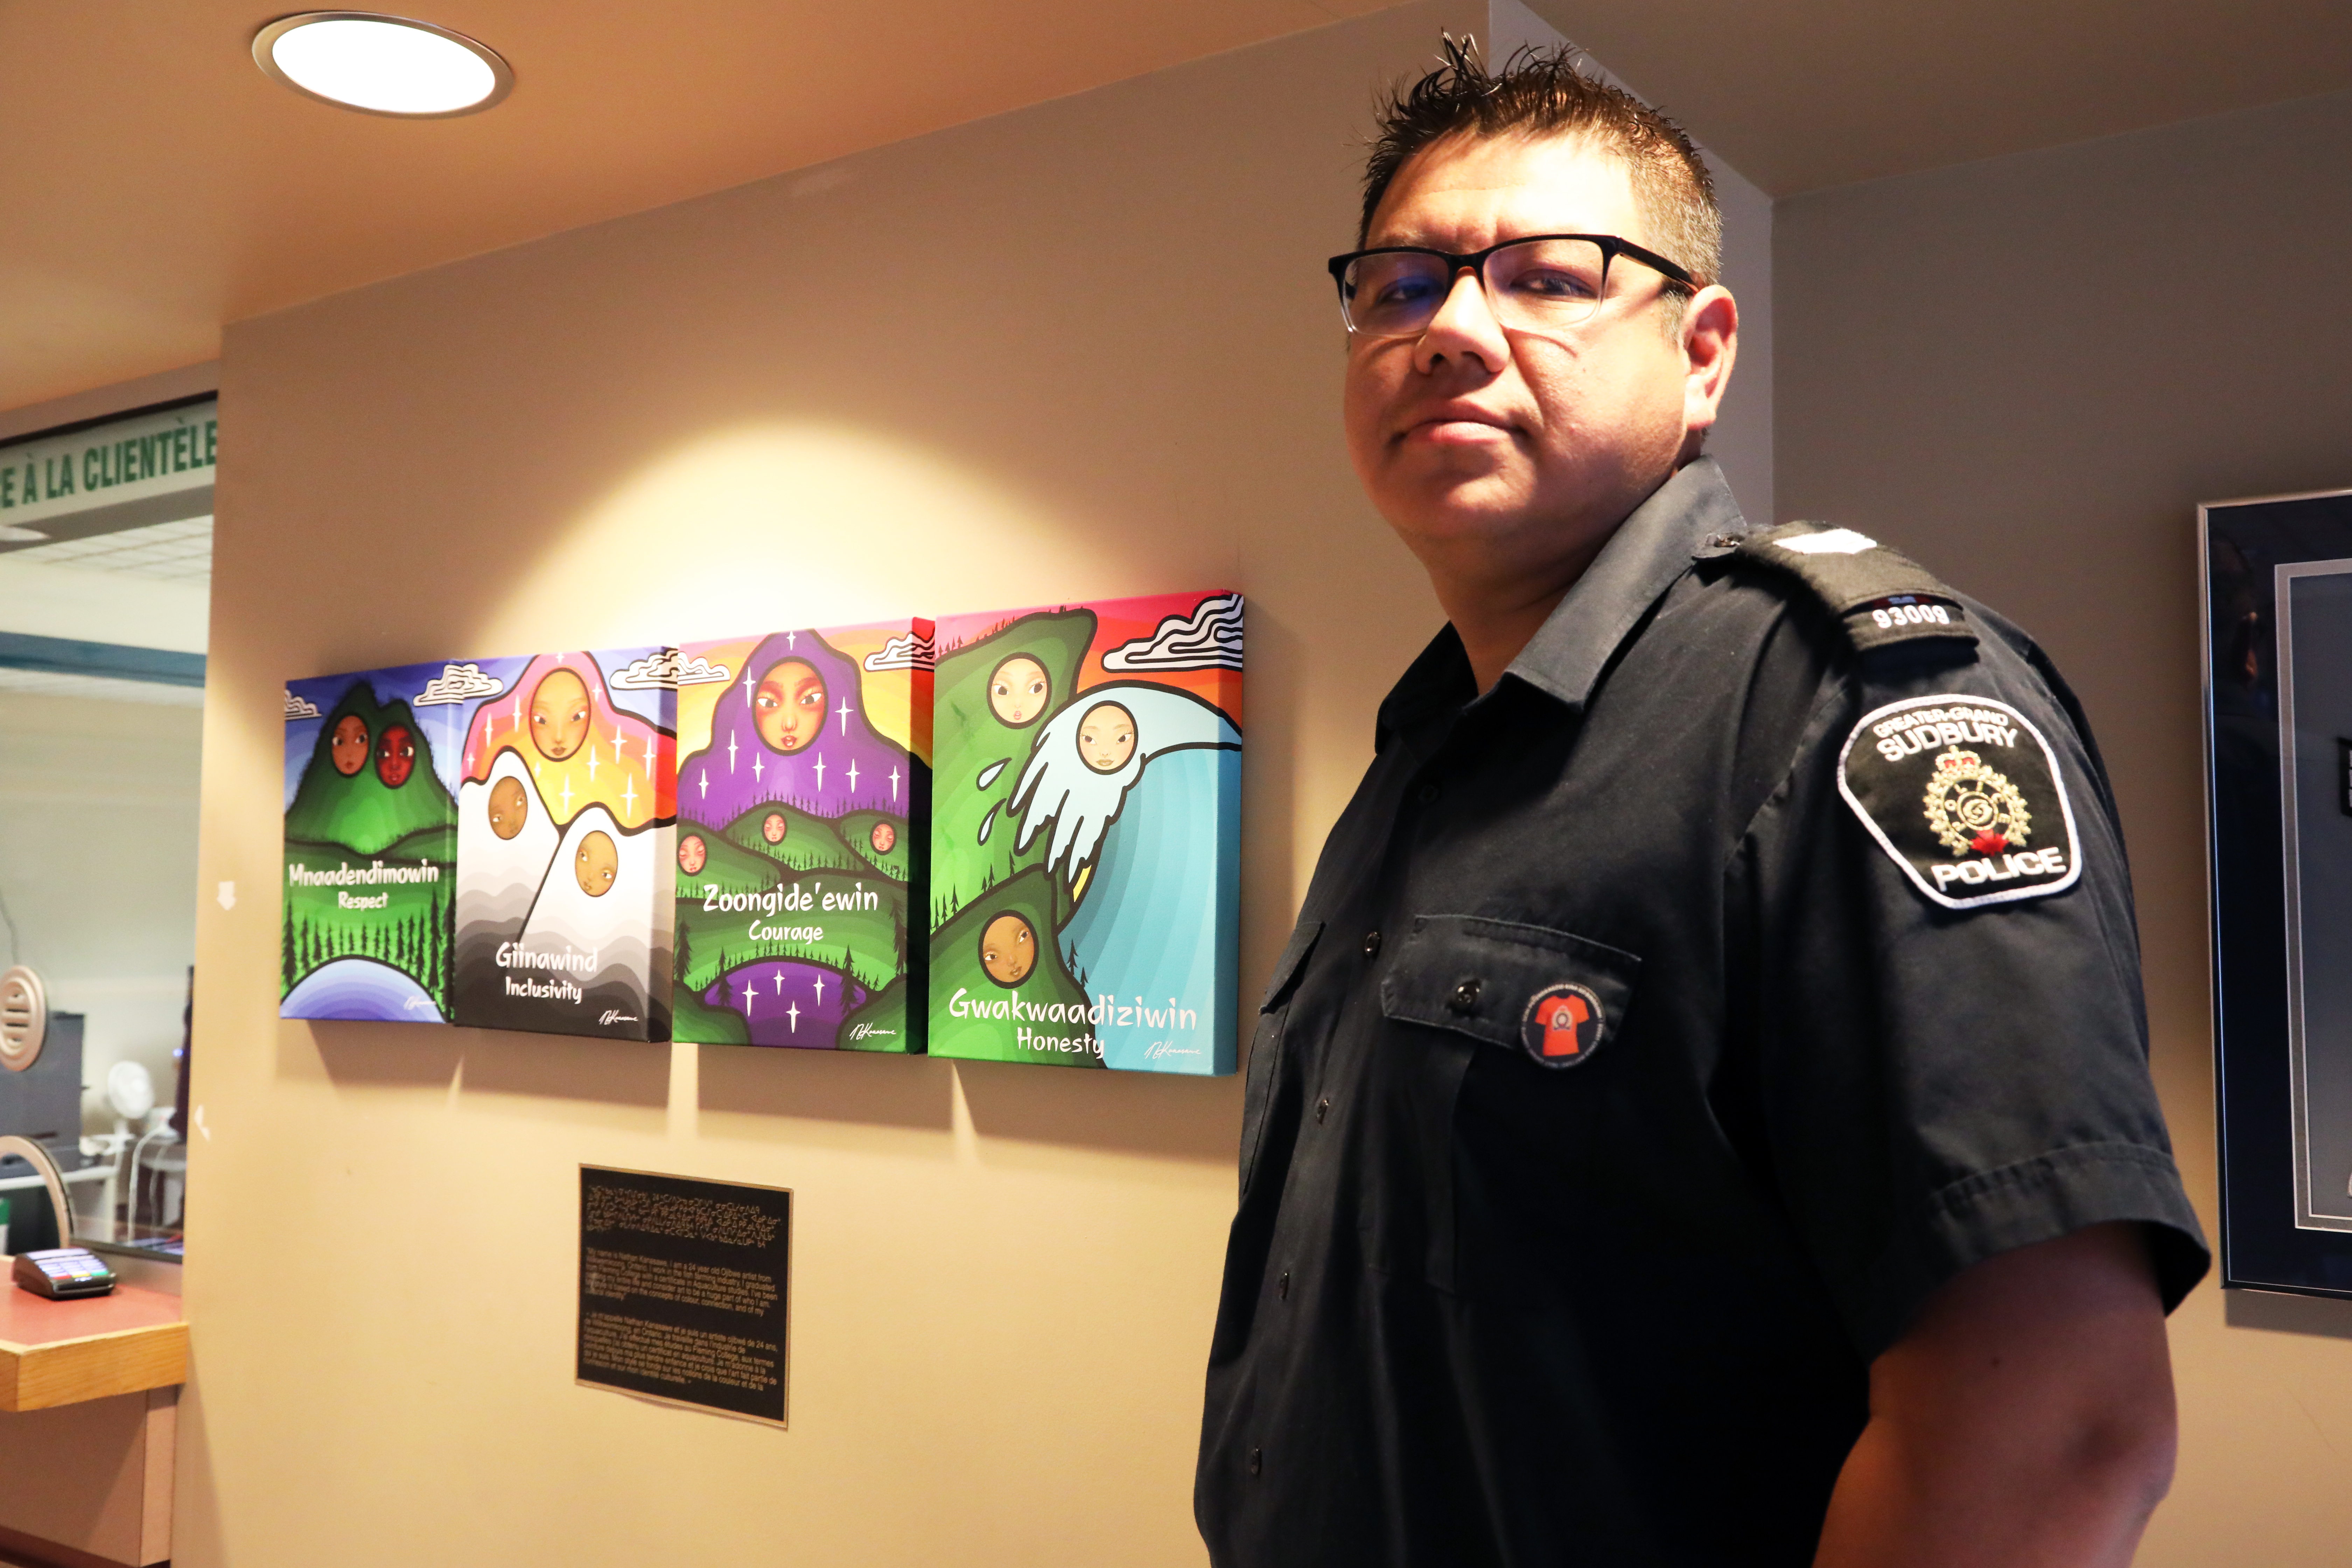 Officer wearing orange pin standing in front of Indigenous art work